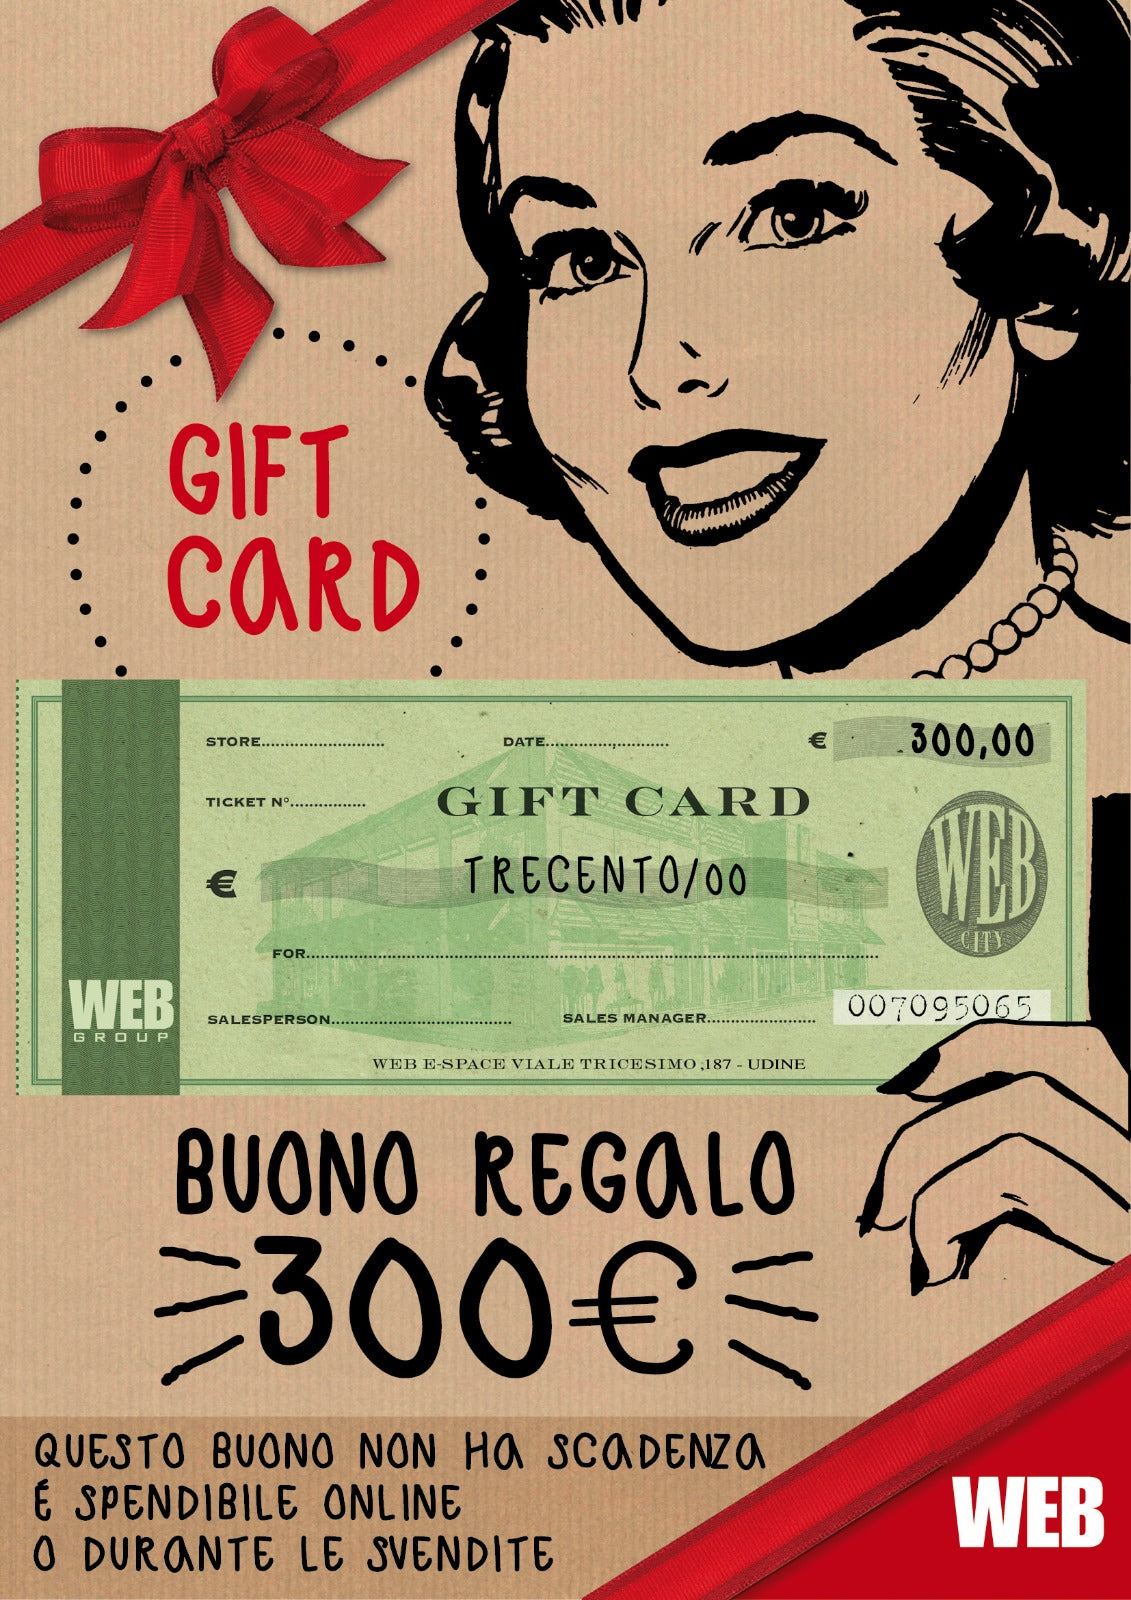 Buono Regalo - Shoppy Code